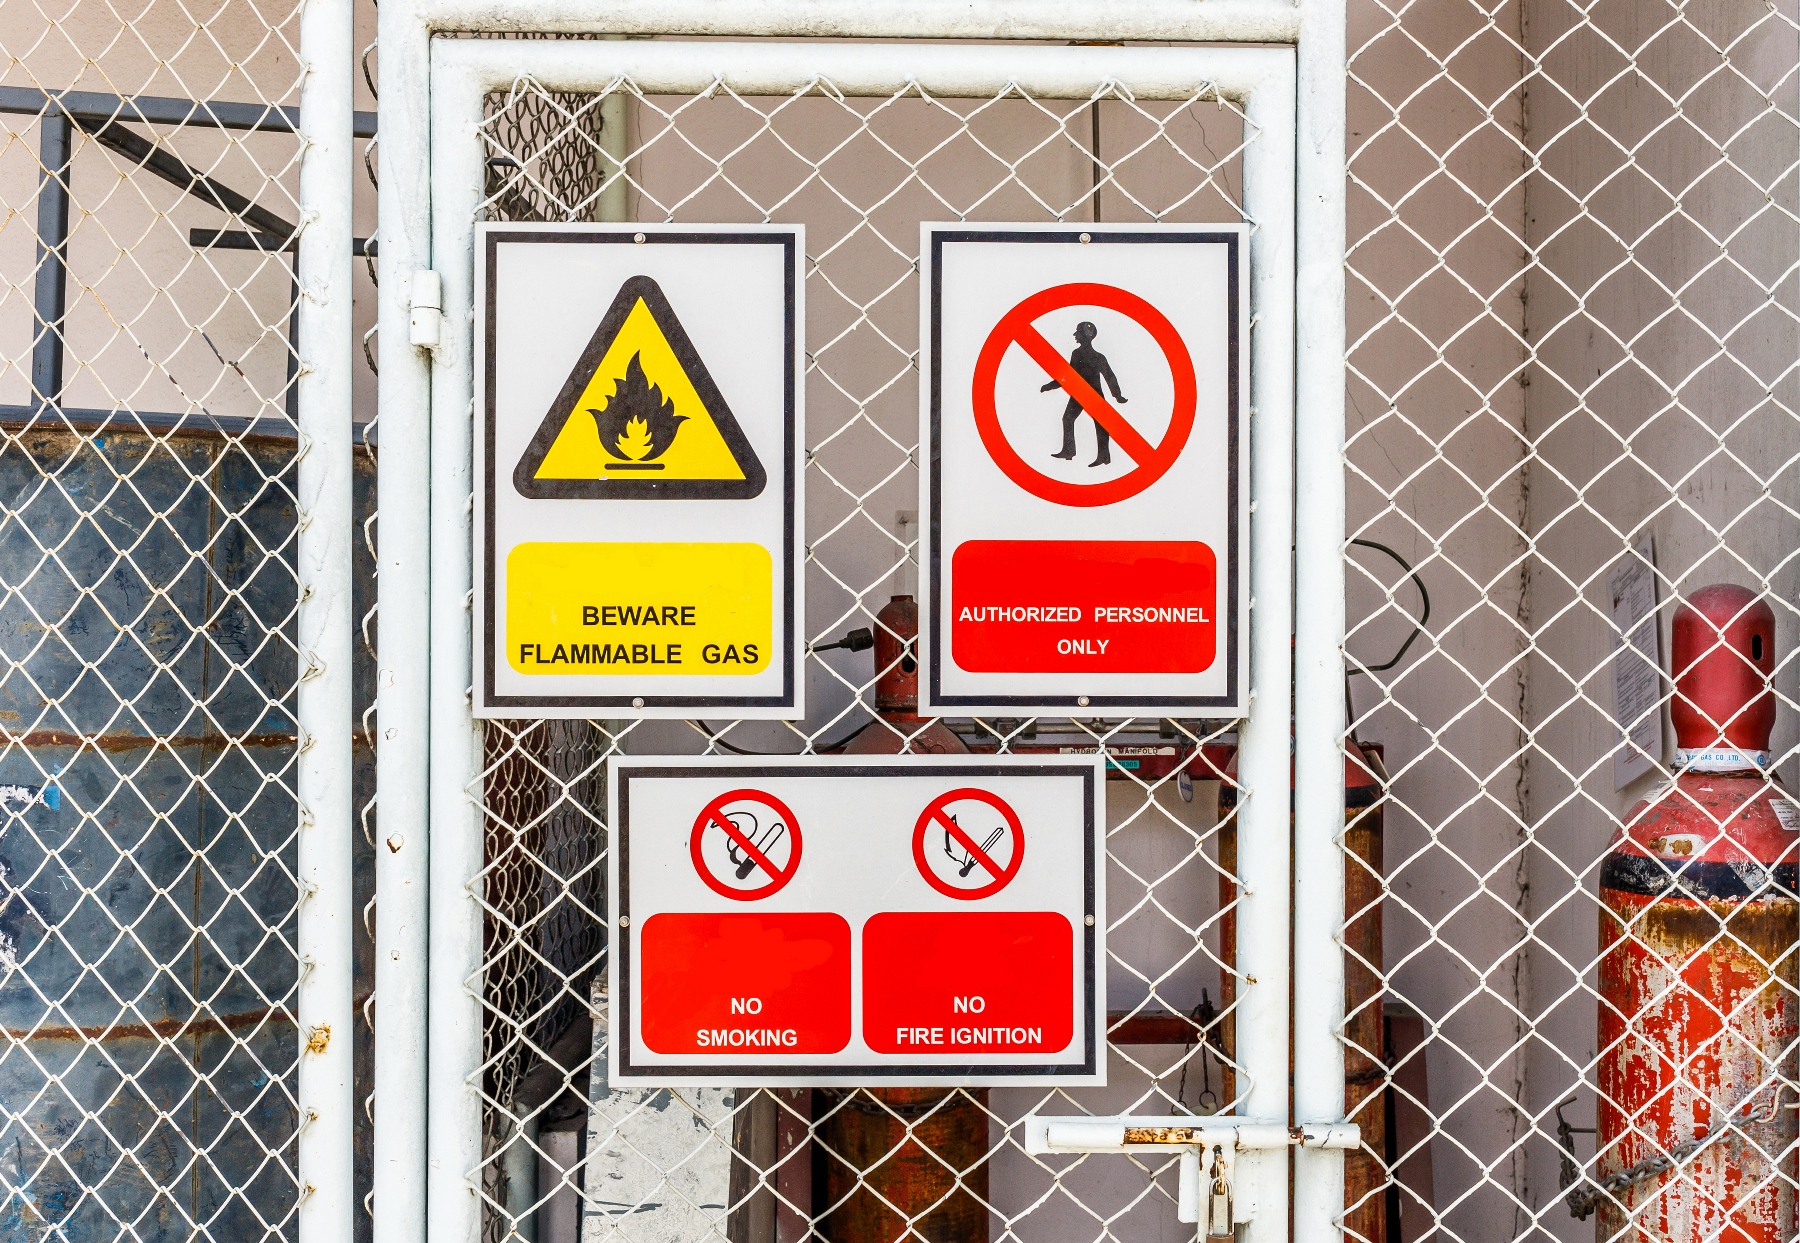 Construction Safety Signage